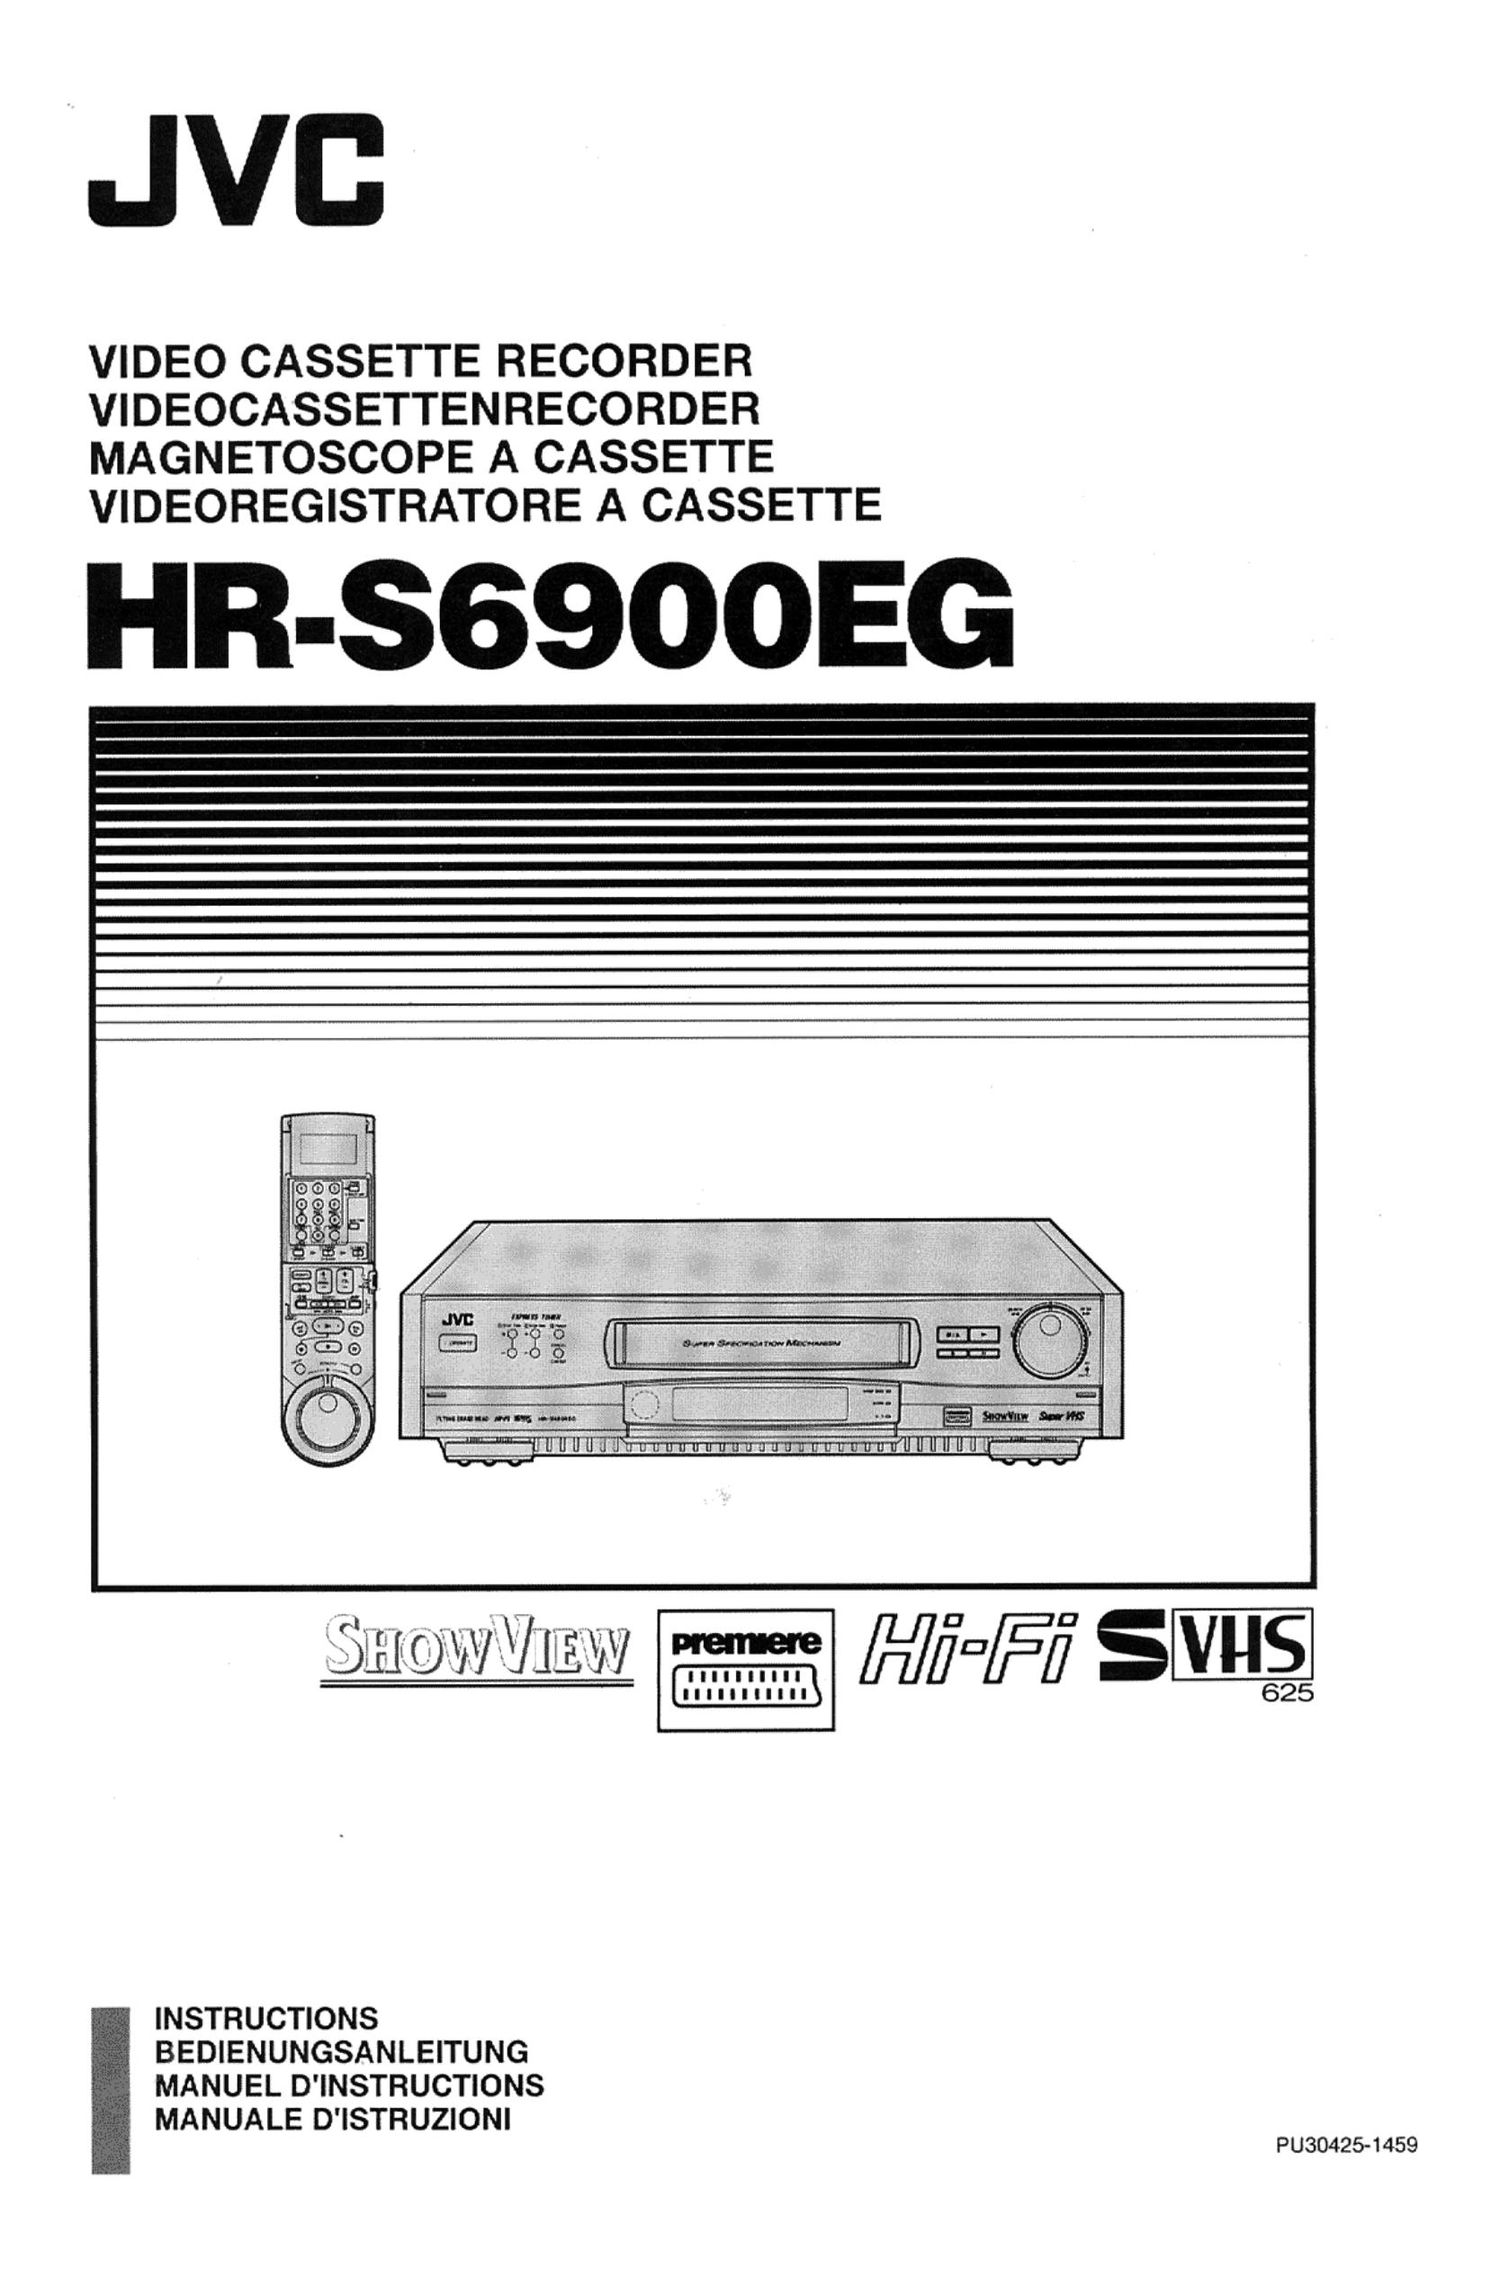 Jvc HRS 6900 EG Owners Manual